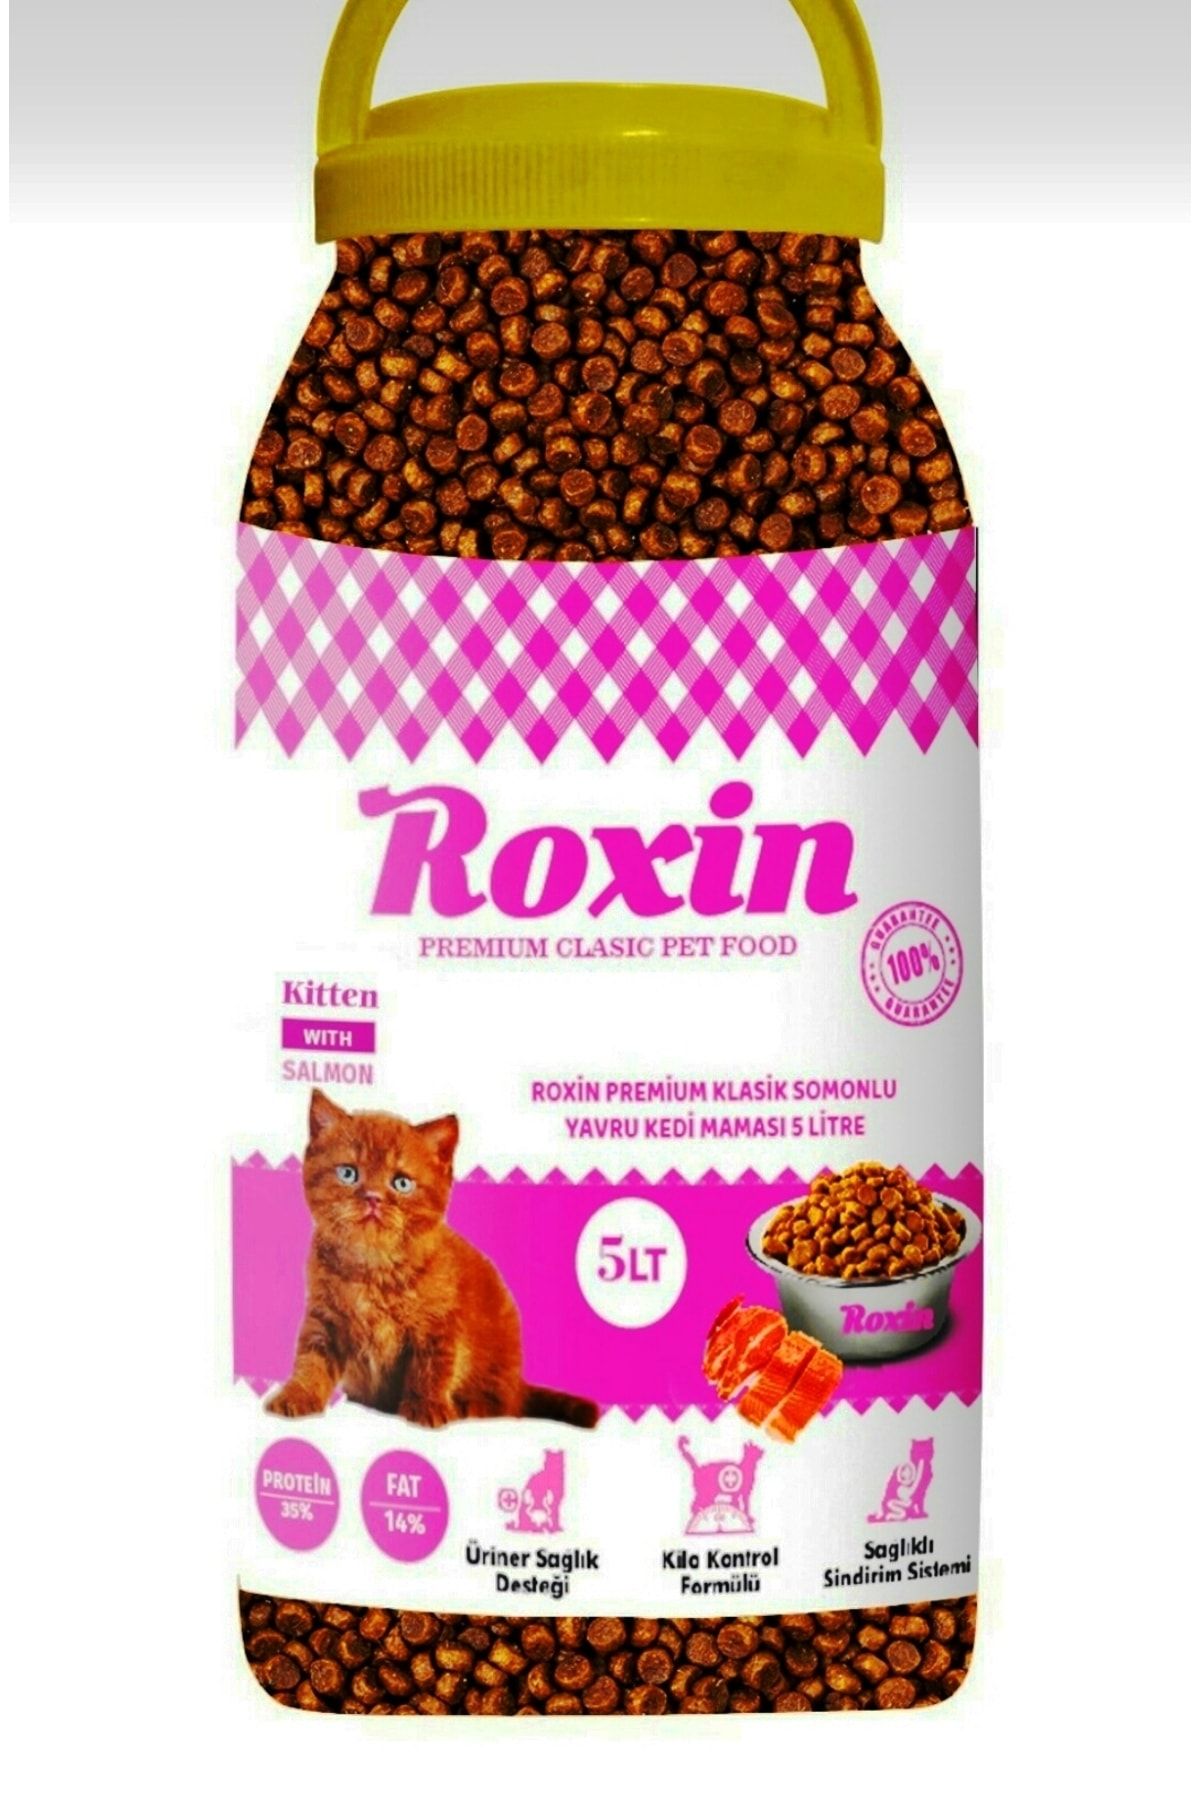 Roxin Premium Klasik Somonlu Yavru Kedi Maması 5 Lt